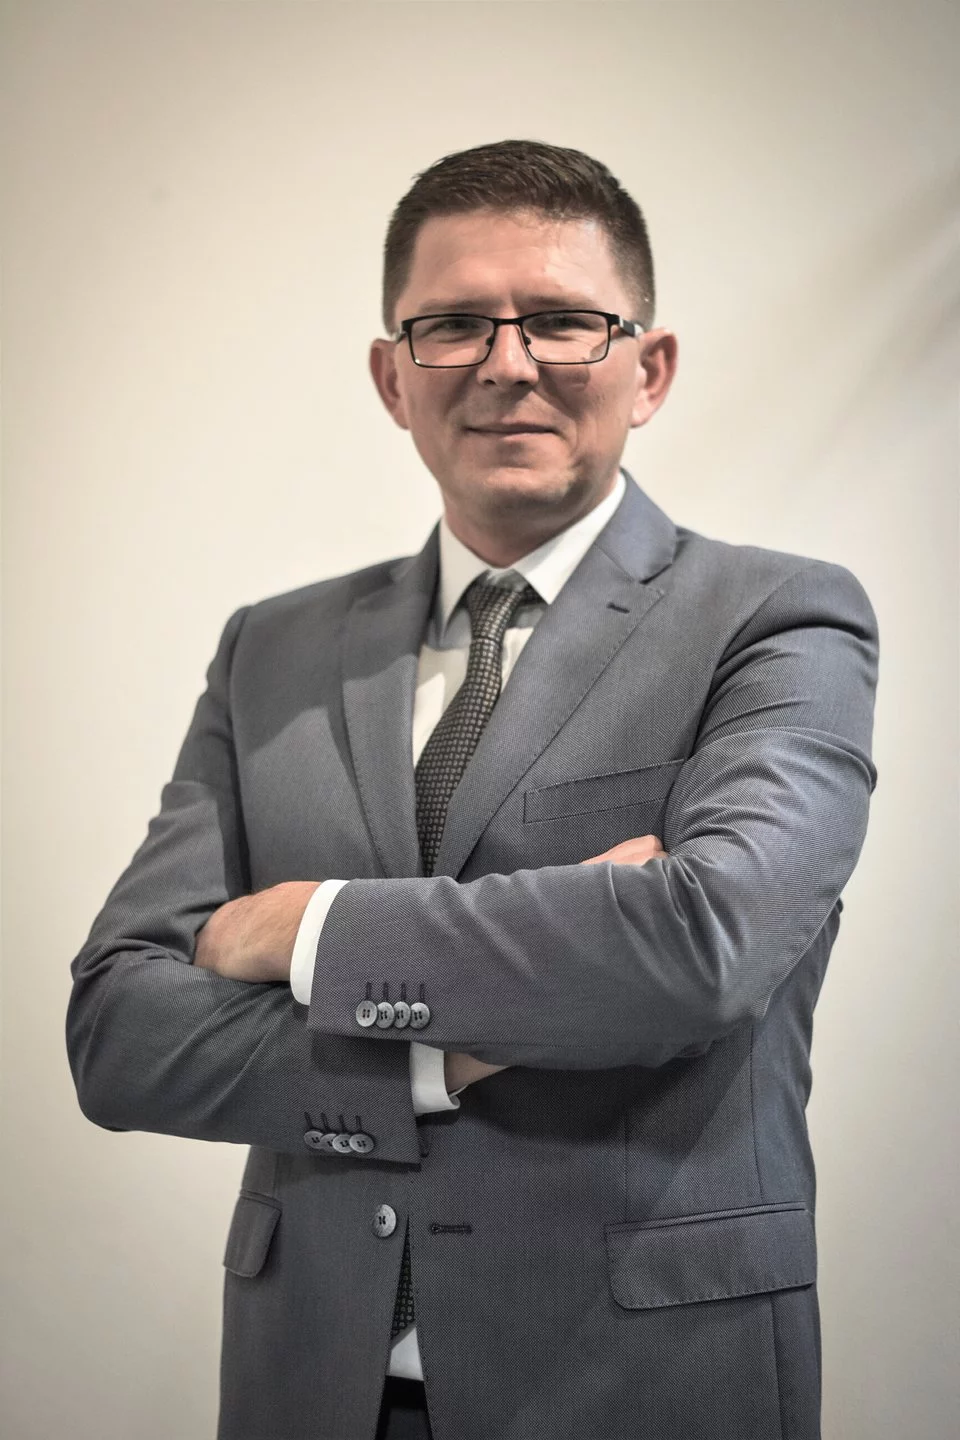 Andrzej Chłopek Dyrektor Handlowy Probet-Dasag